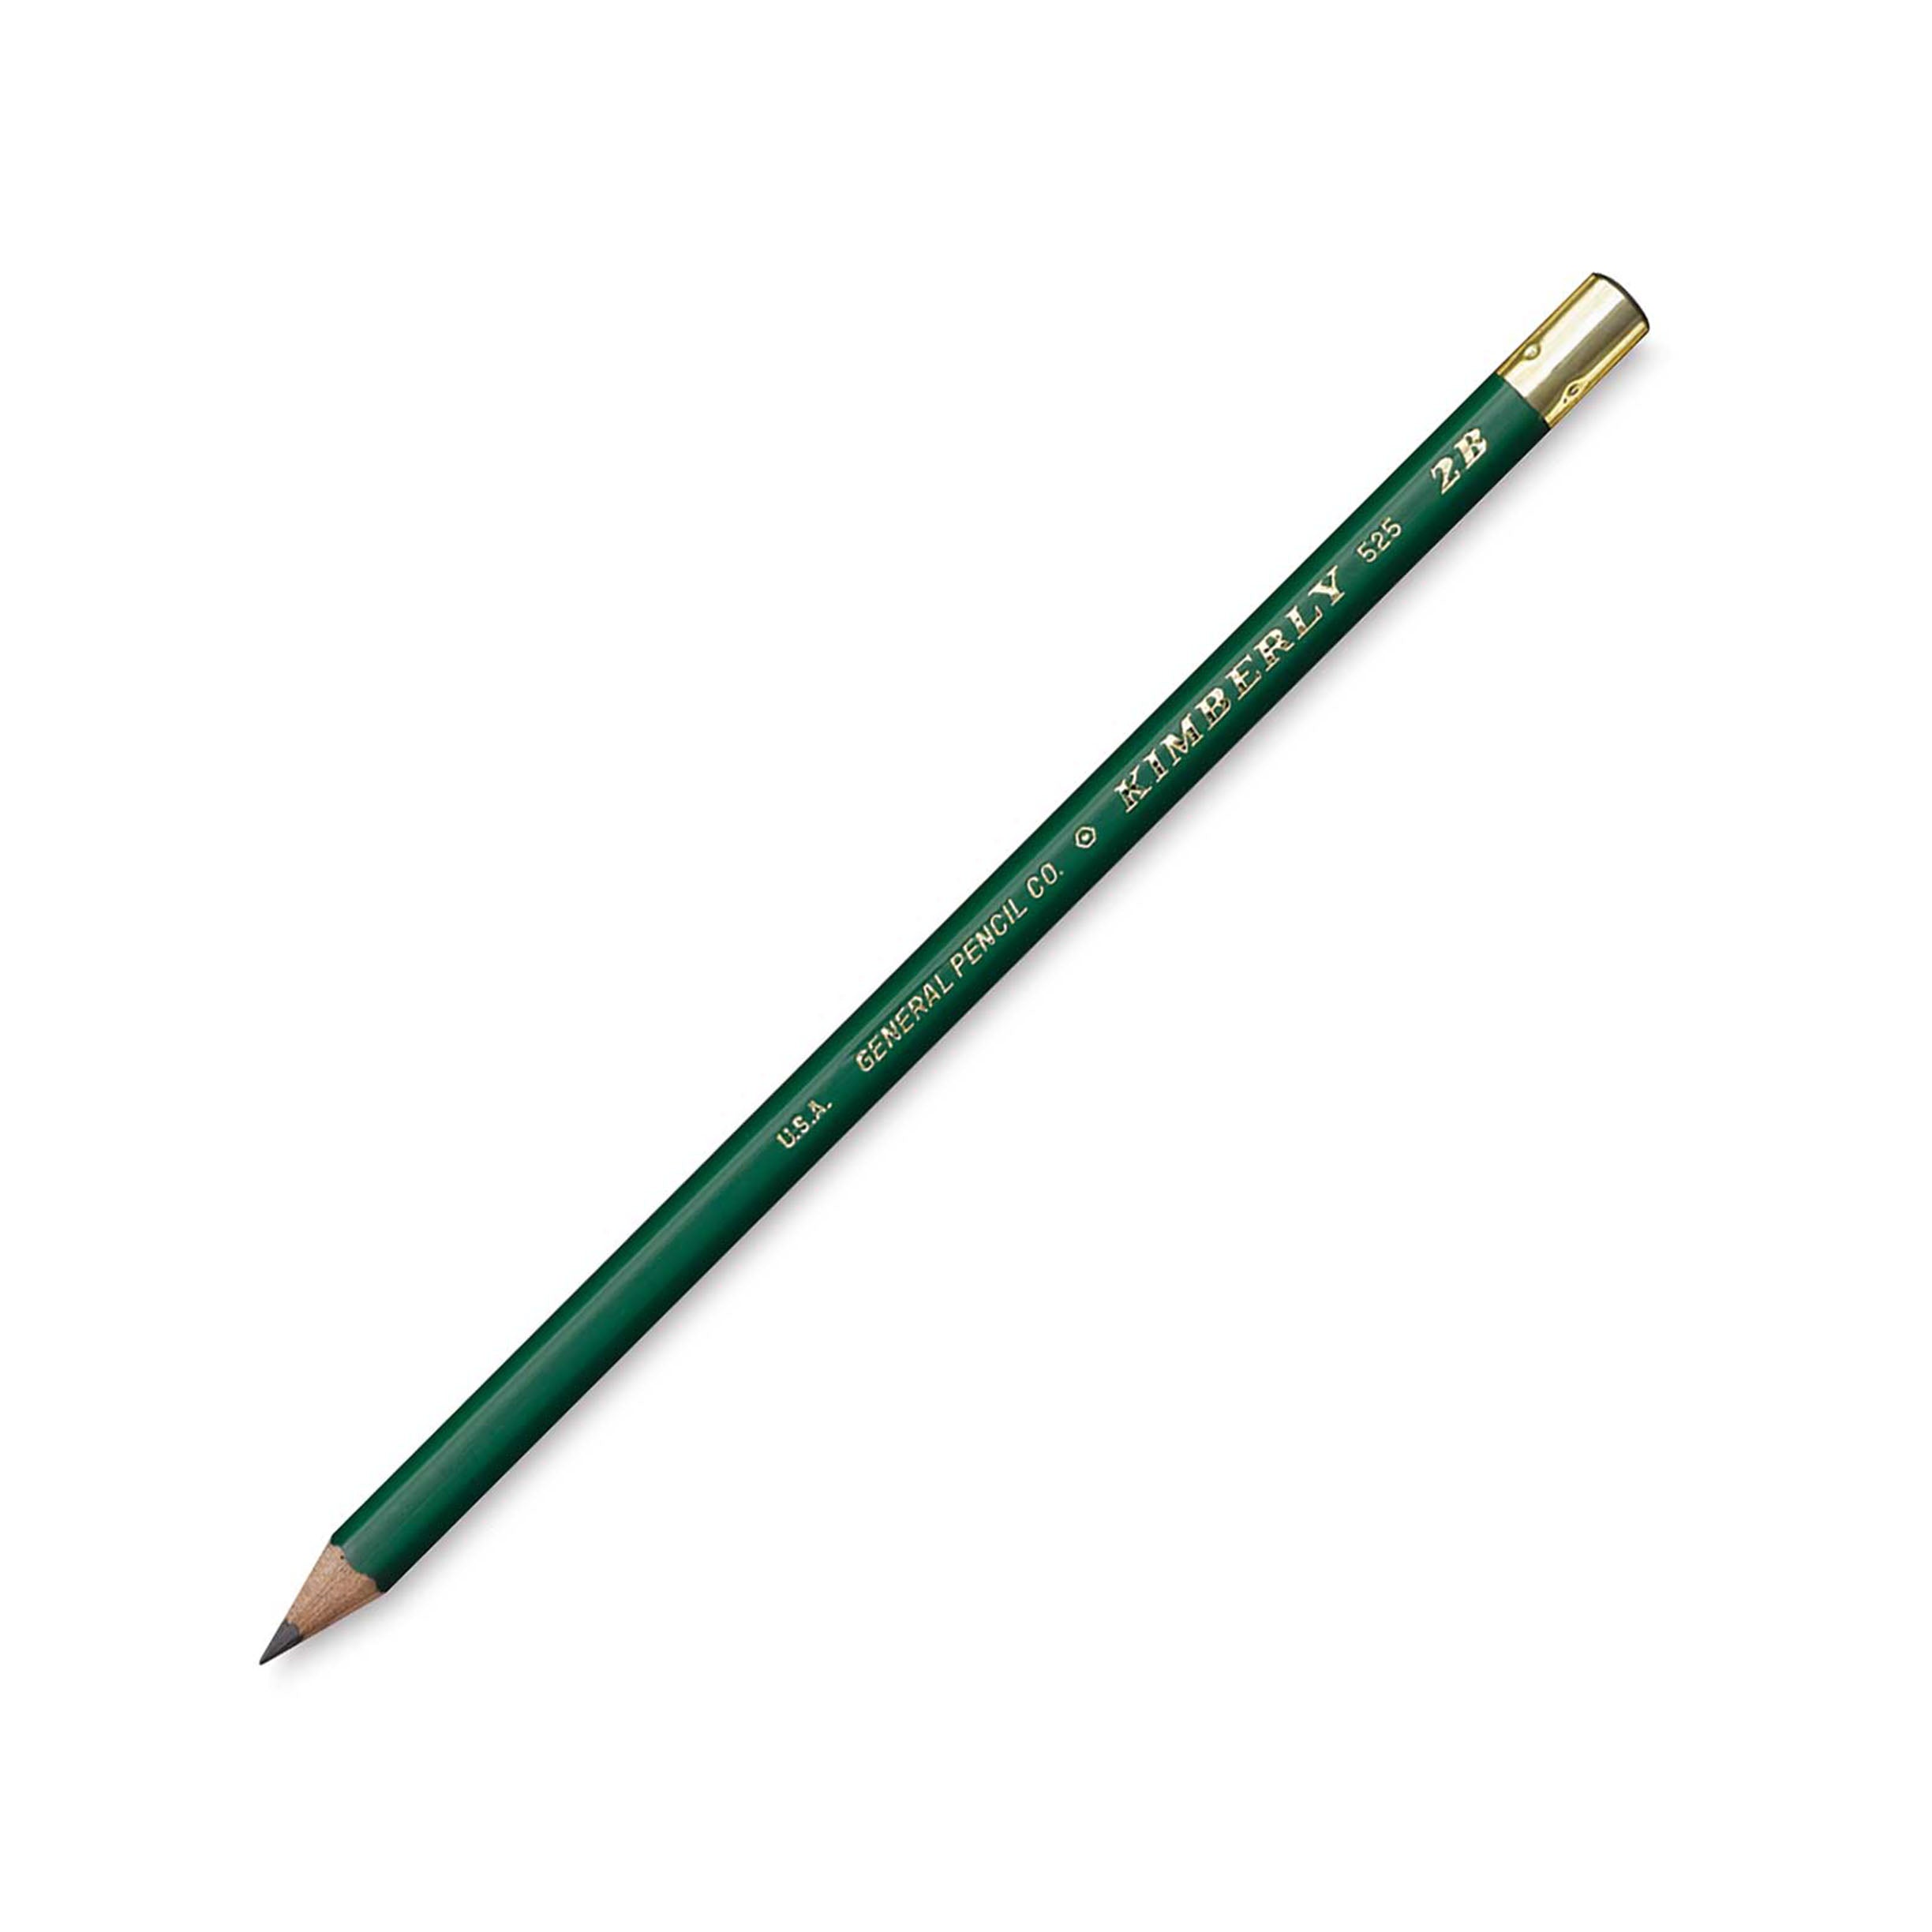 General's Pencil Co.